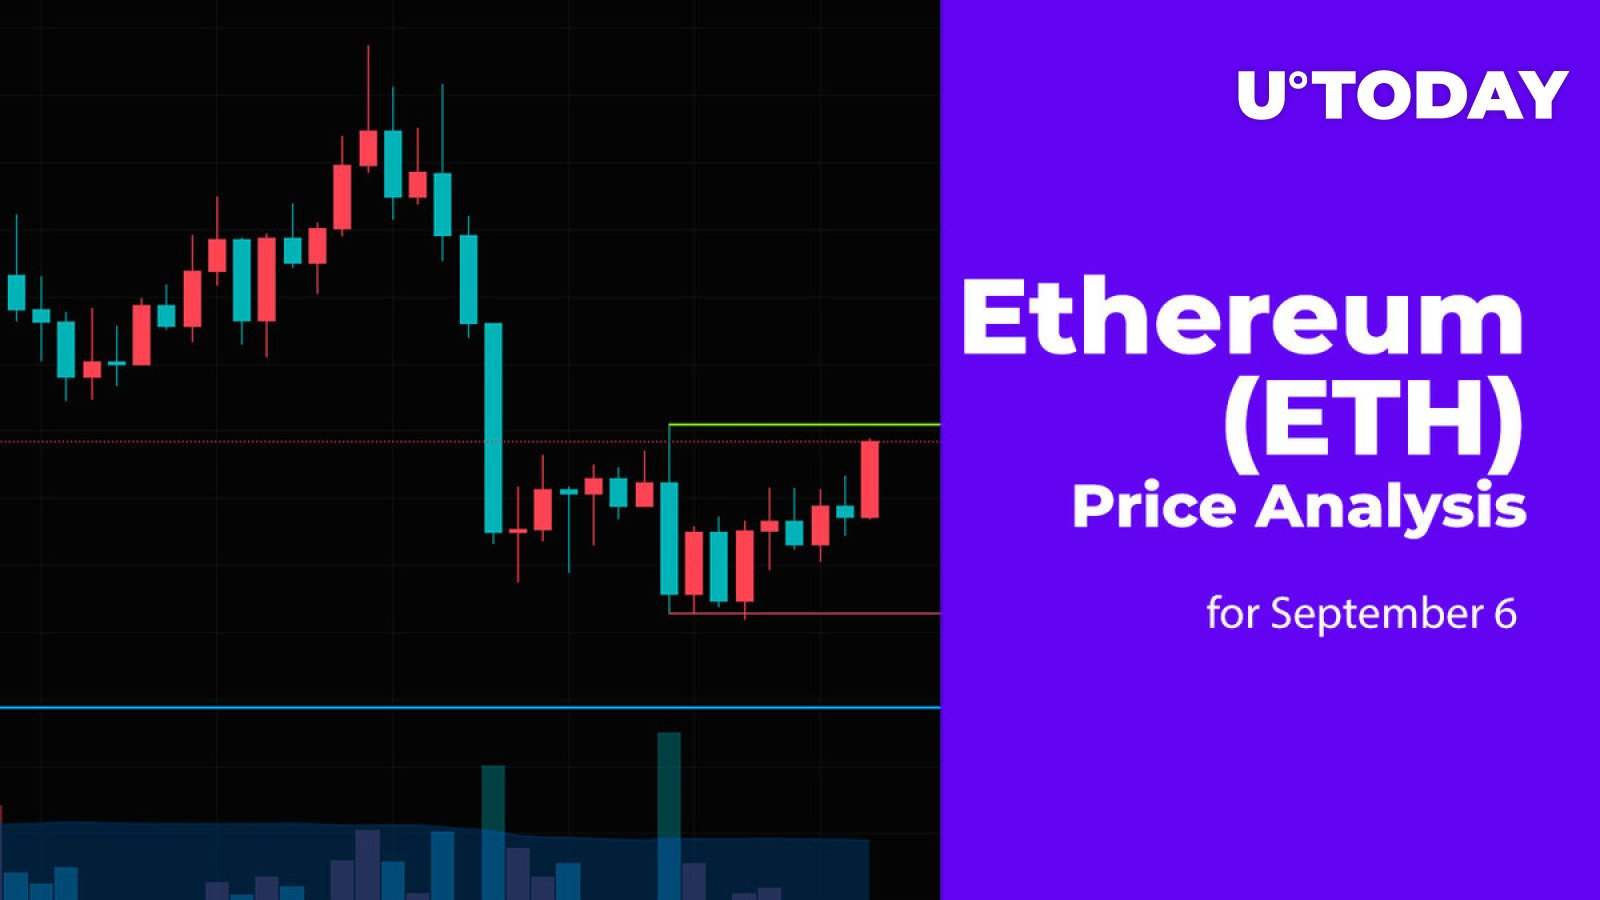 Ethereum (ETH) Price Analysis for September 6